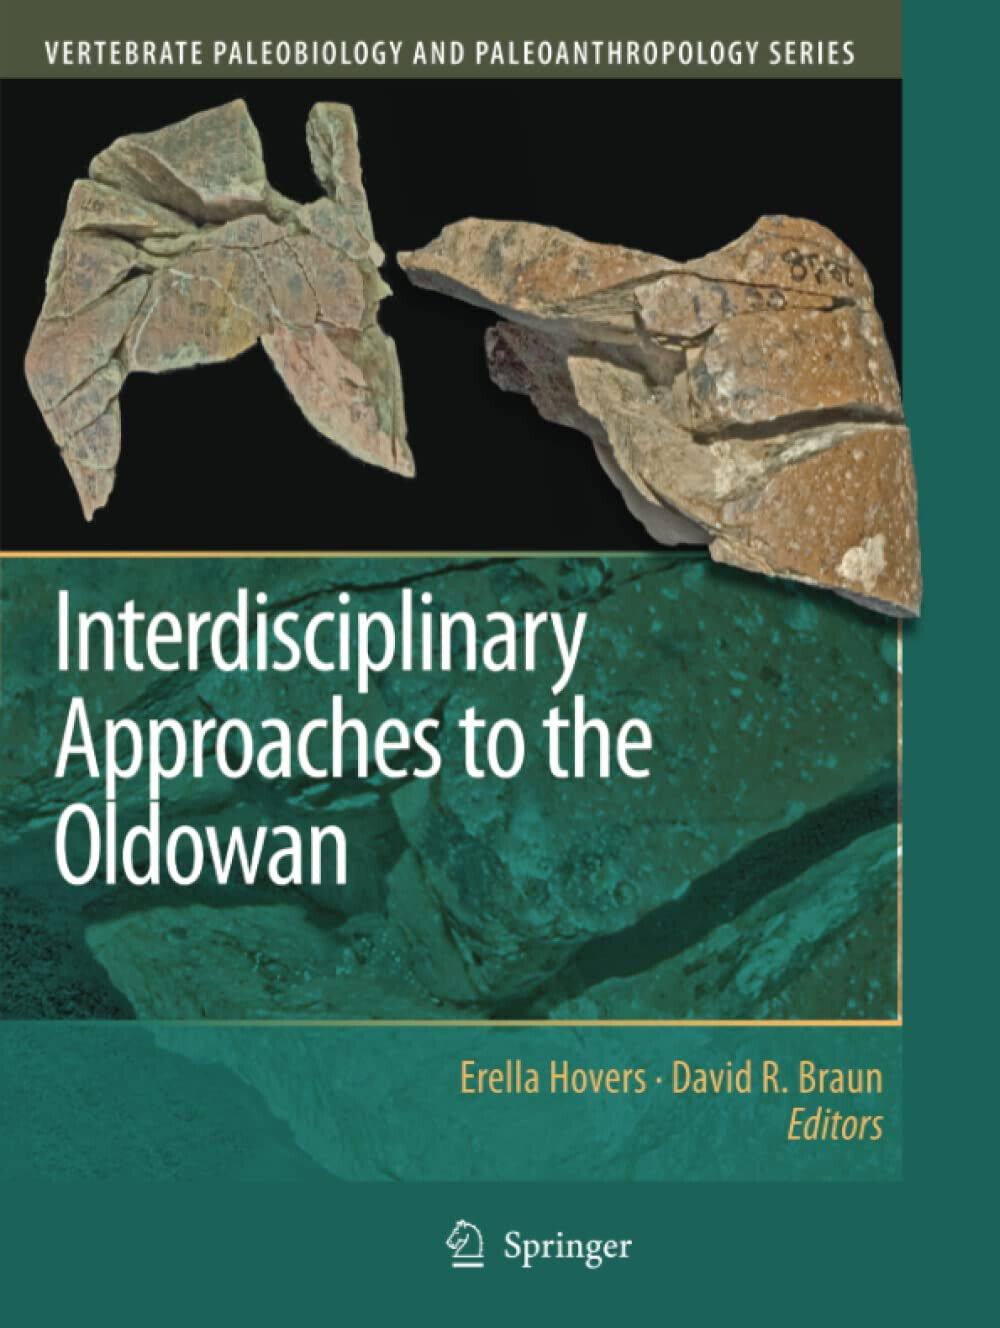 Interdisciplinary Approaches to the Oldowan - Erella Hovers - Springer, 2010